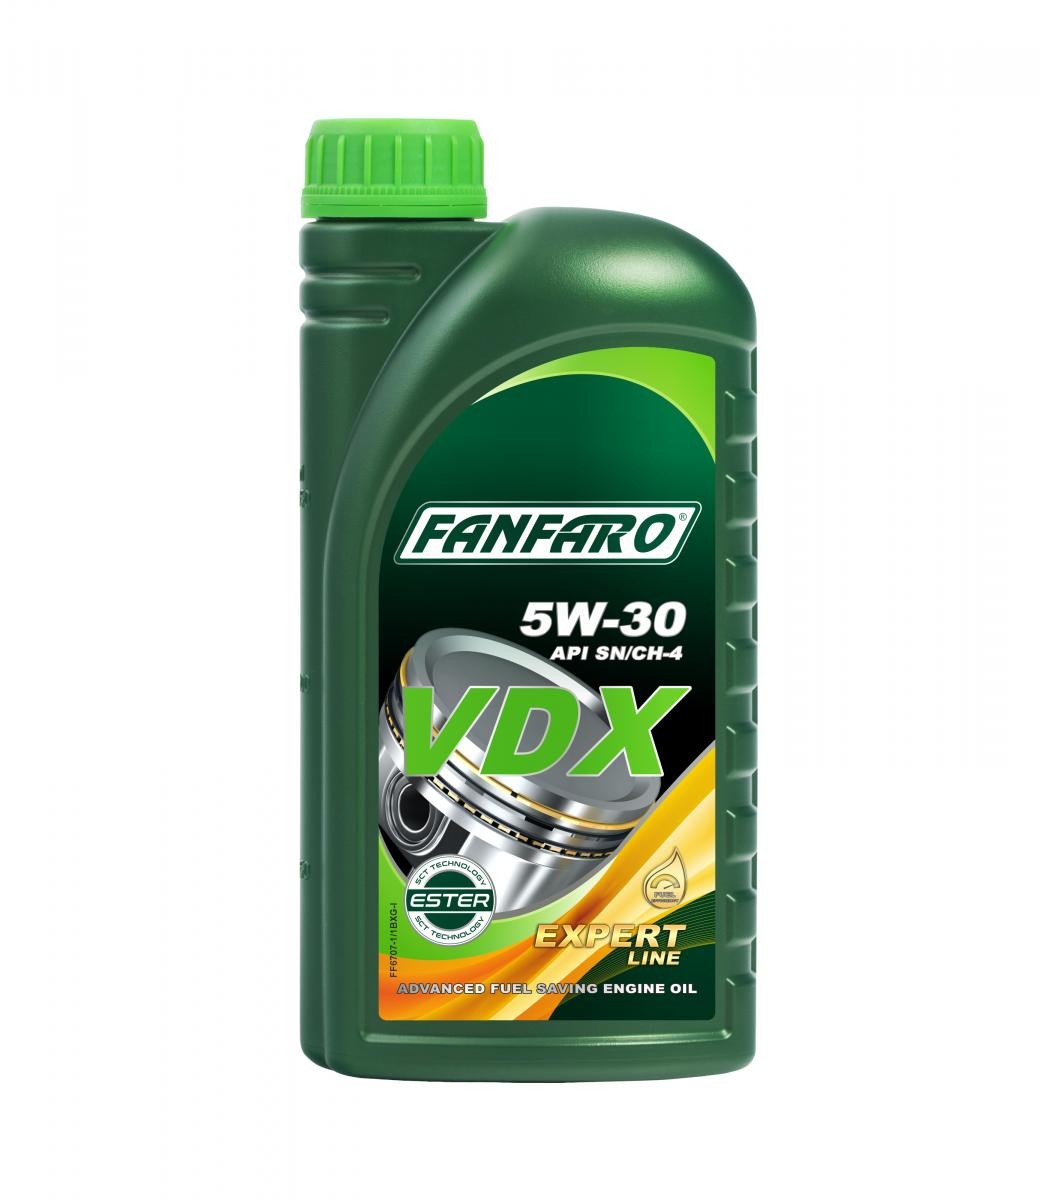 FANFARO Expert Line, VDX 5W-30, 1l, Synthetic Oil Motor oil FF6707-1 buy